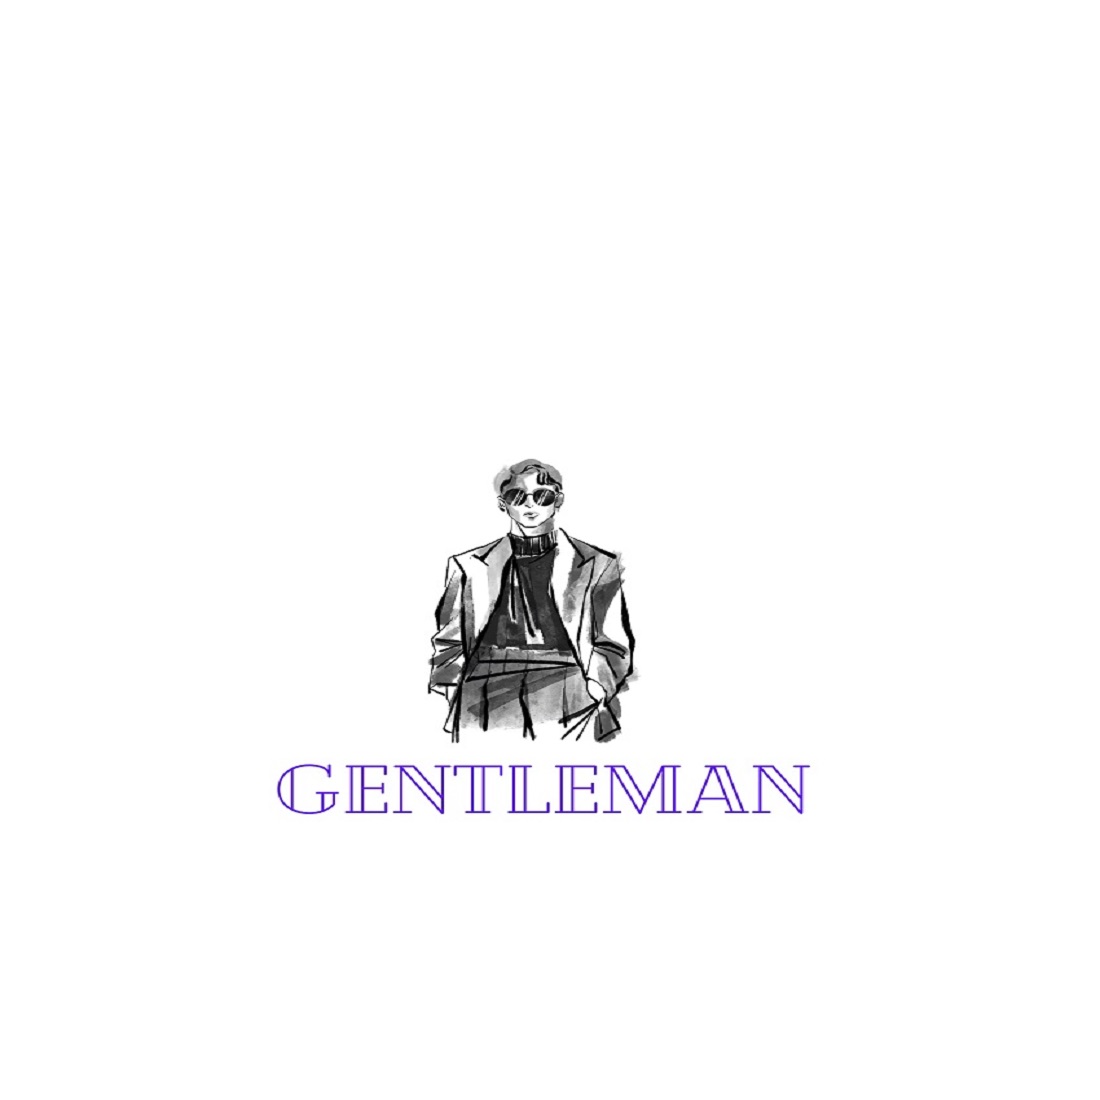 Gentleman T-Shirt Design pinterest image.